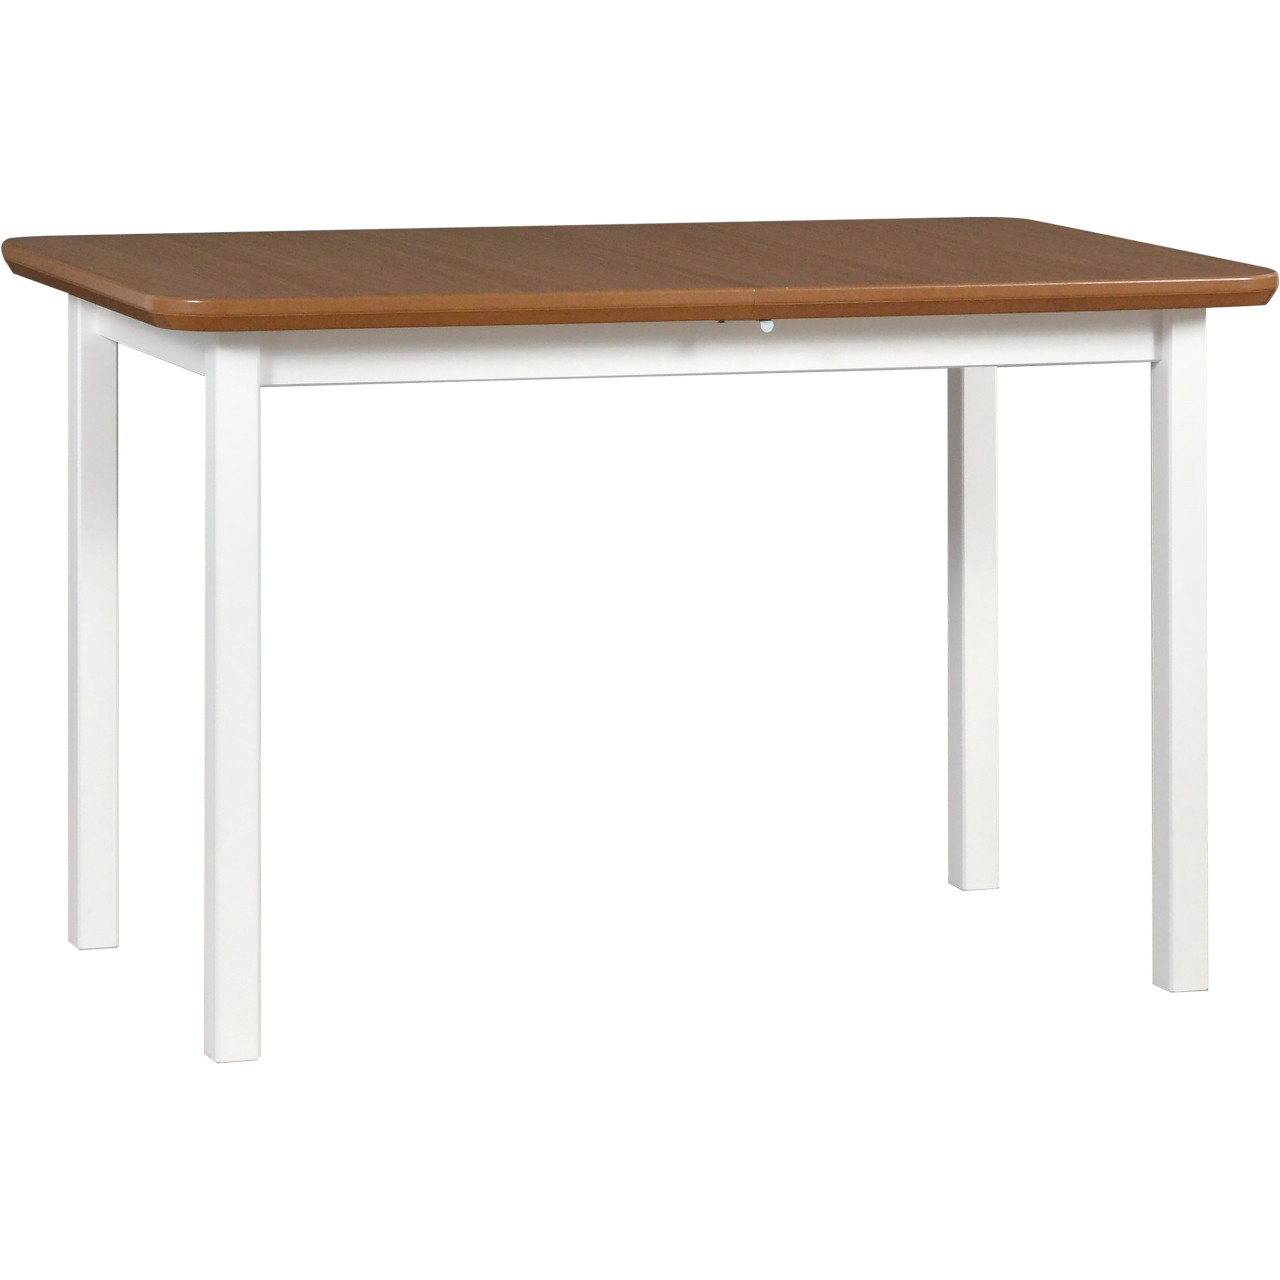 Table MAX 4 70x120/150 oak veneer / white